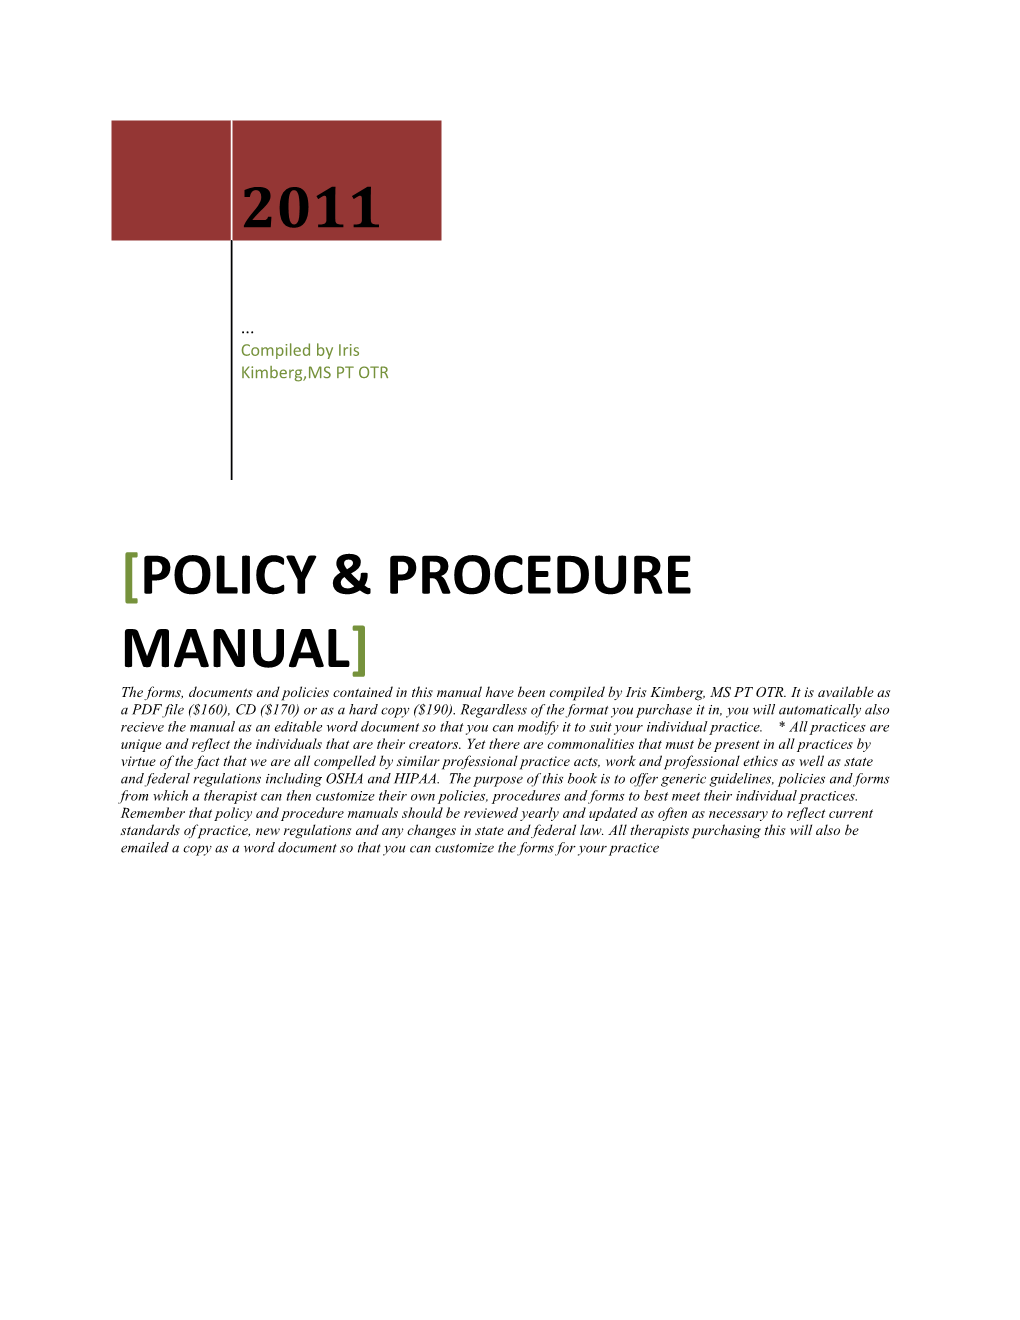 Policy & Procedure Manual